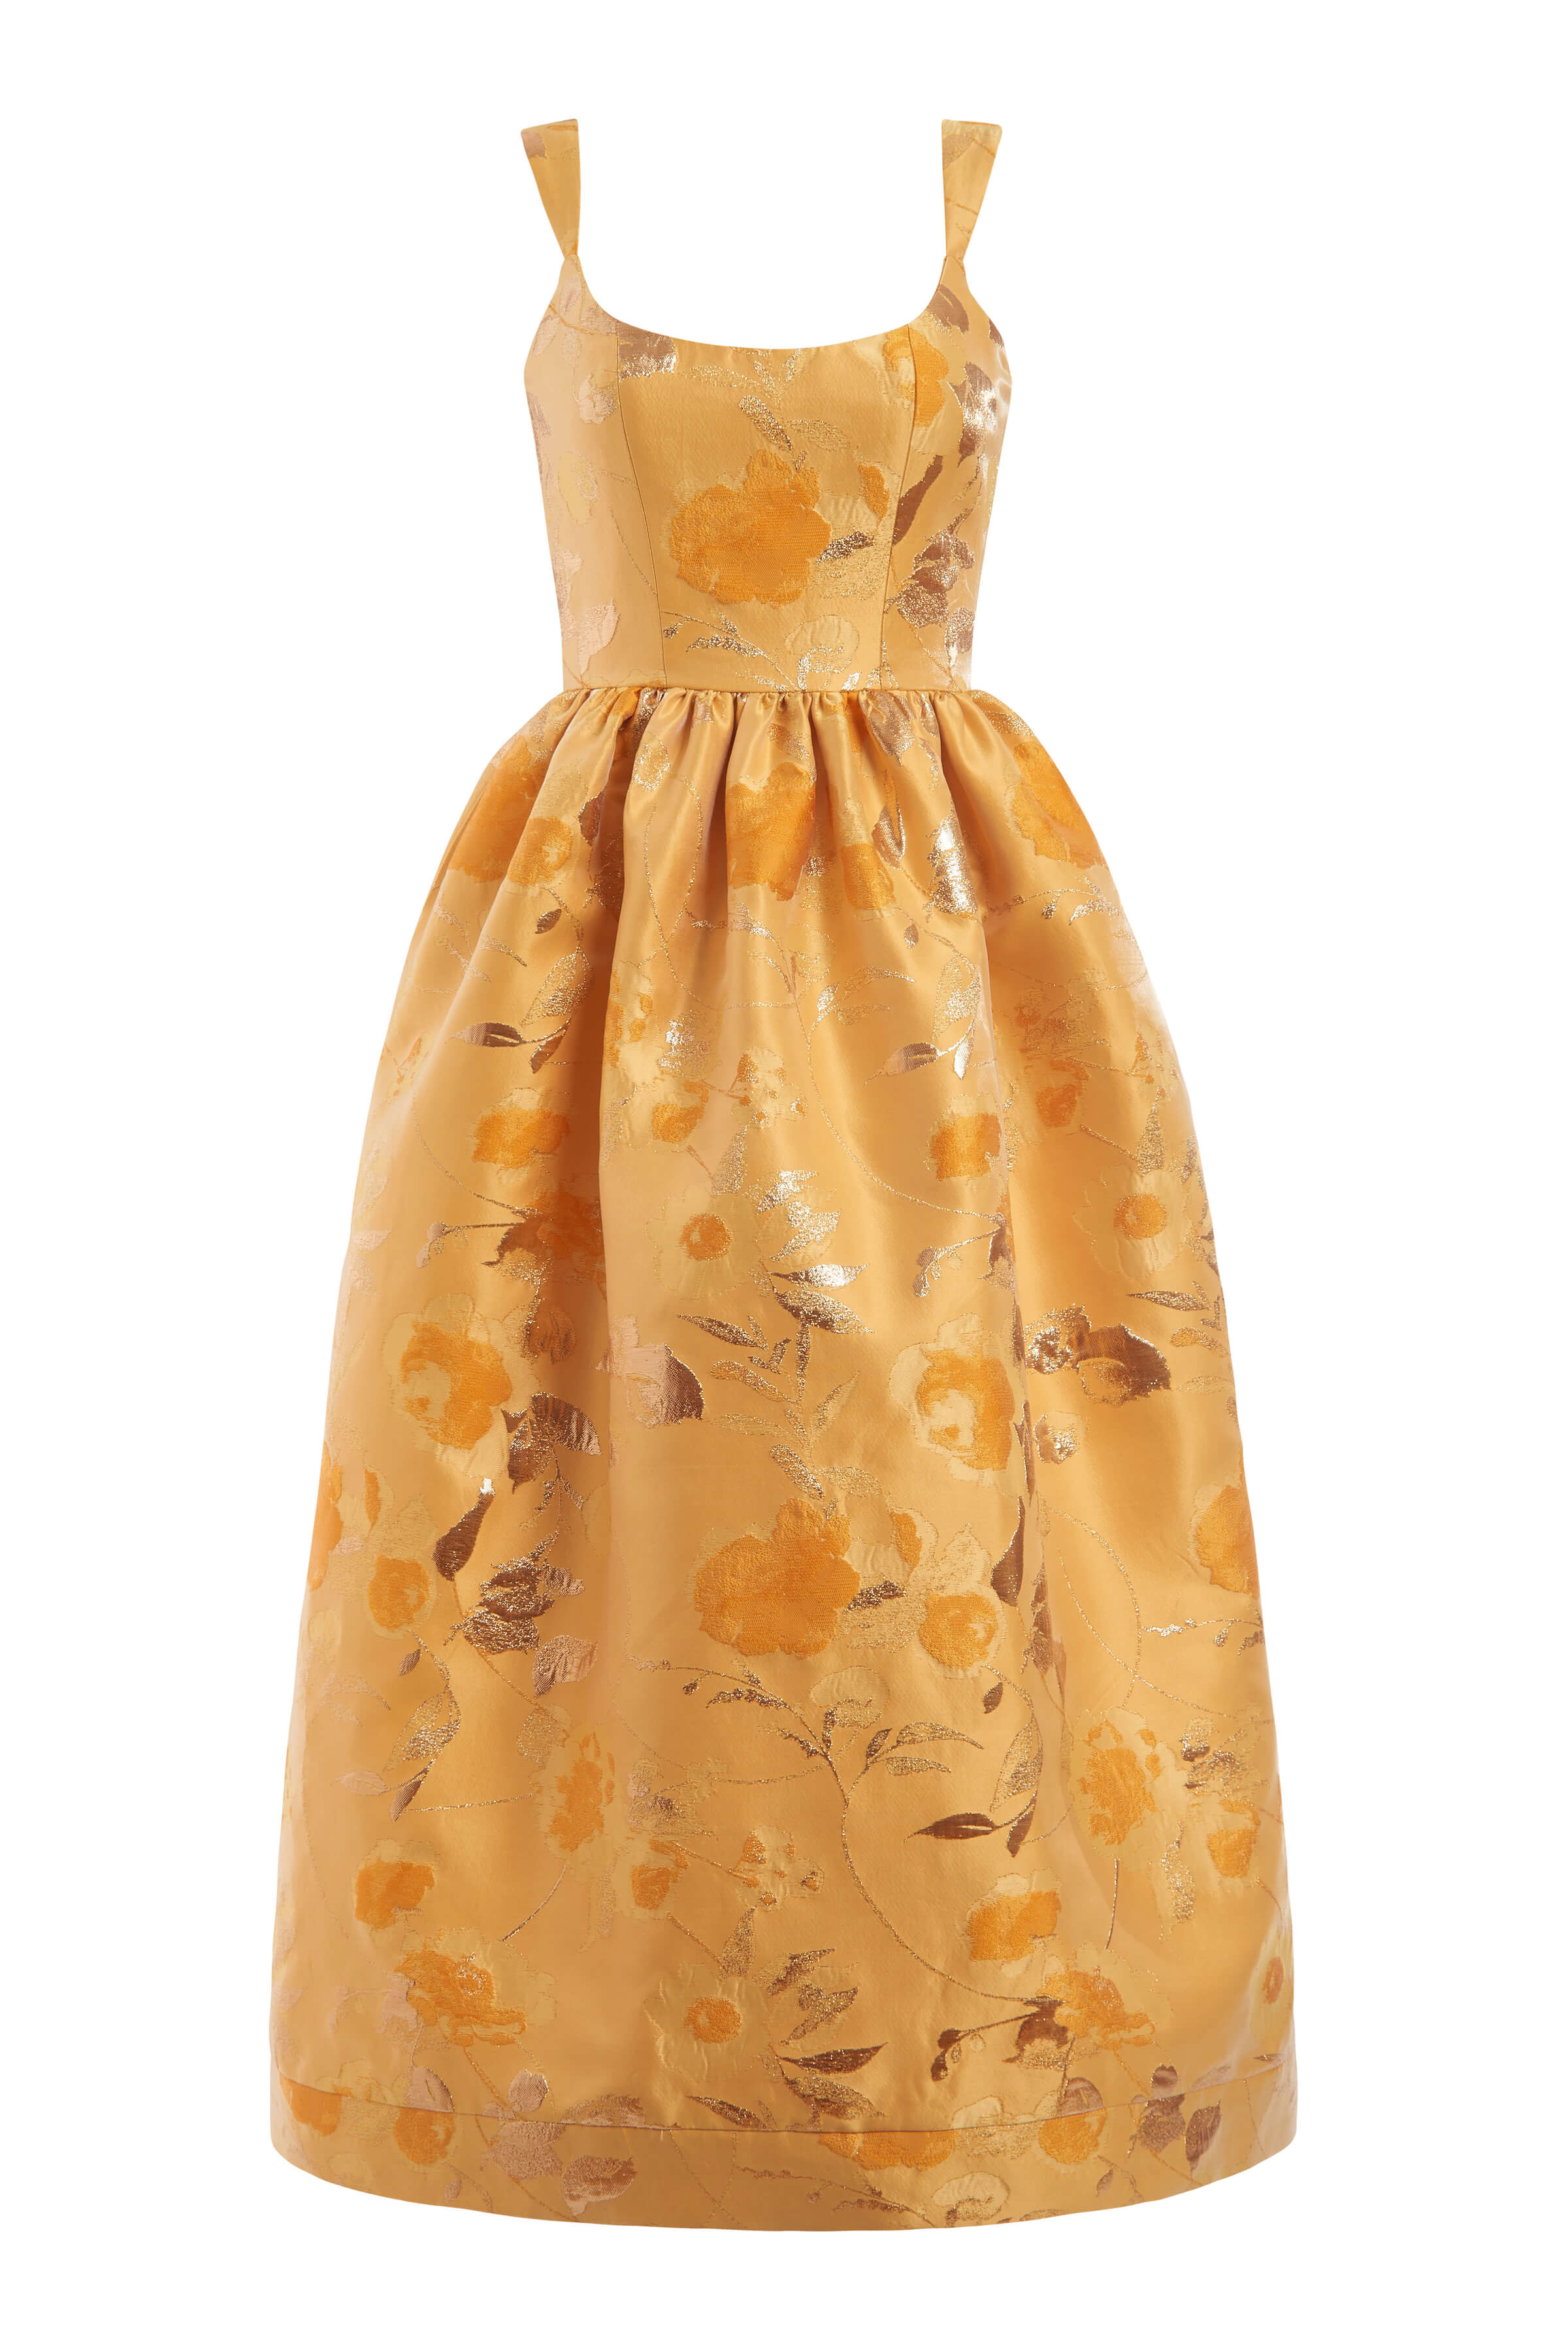 Apple Gold Floral Brocade Full Skirted Corset Dress